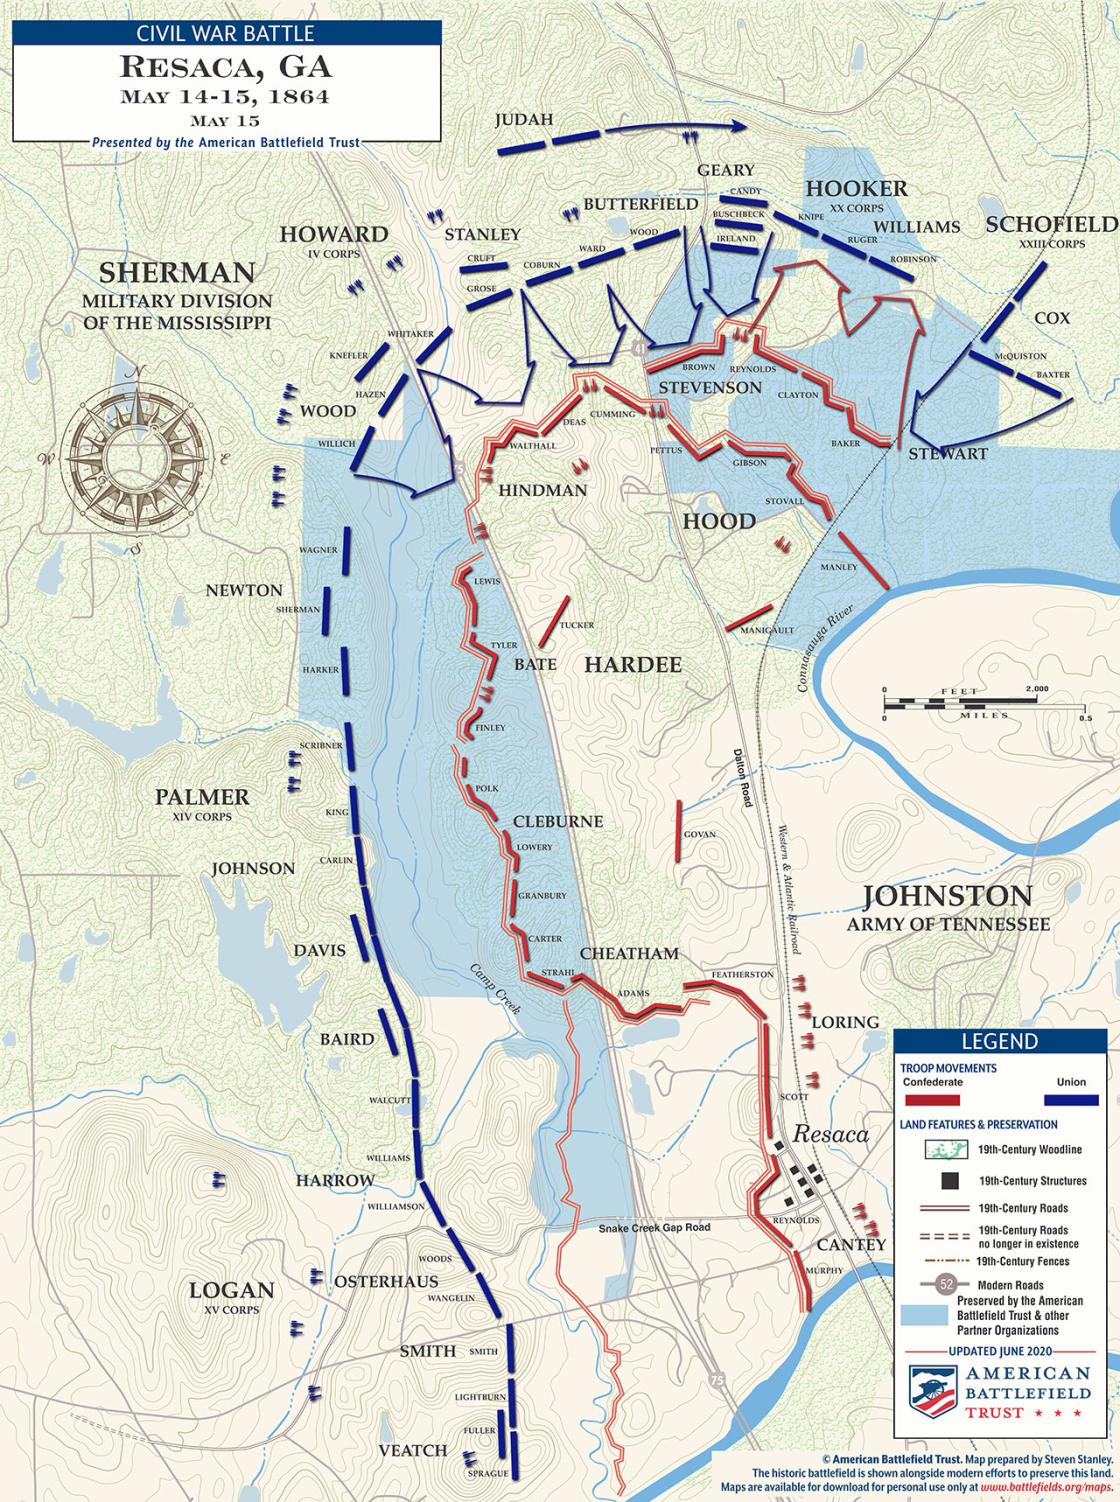 Resaca - May 15, 1864 Battle Map